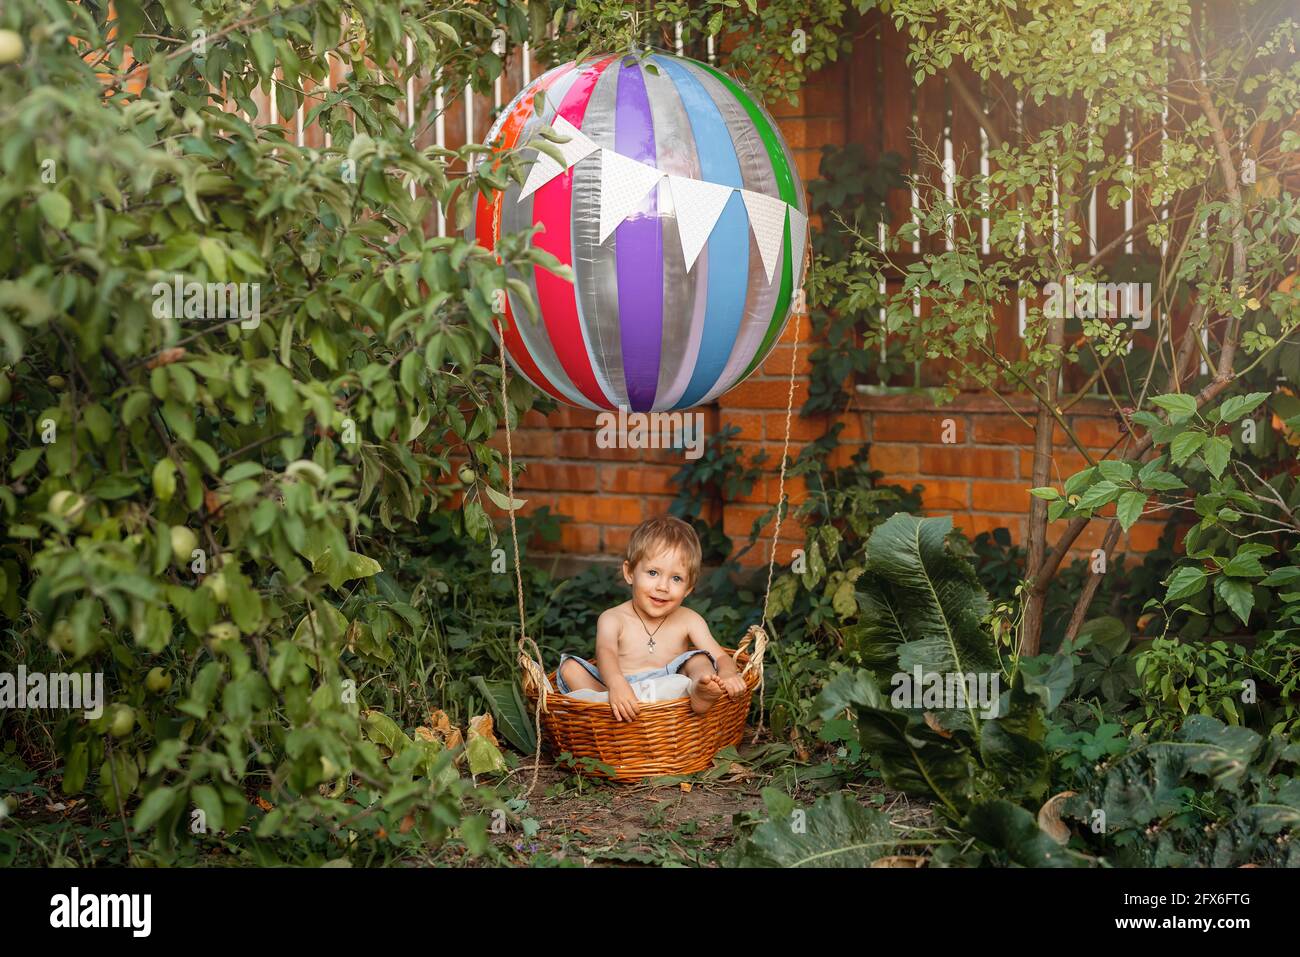 Preschool boy traveling. Child playing in pretend hot air balloon. Stock Photo